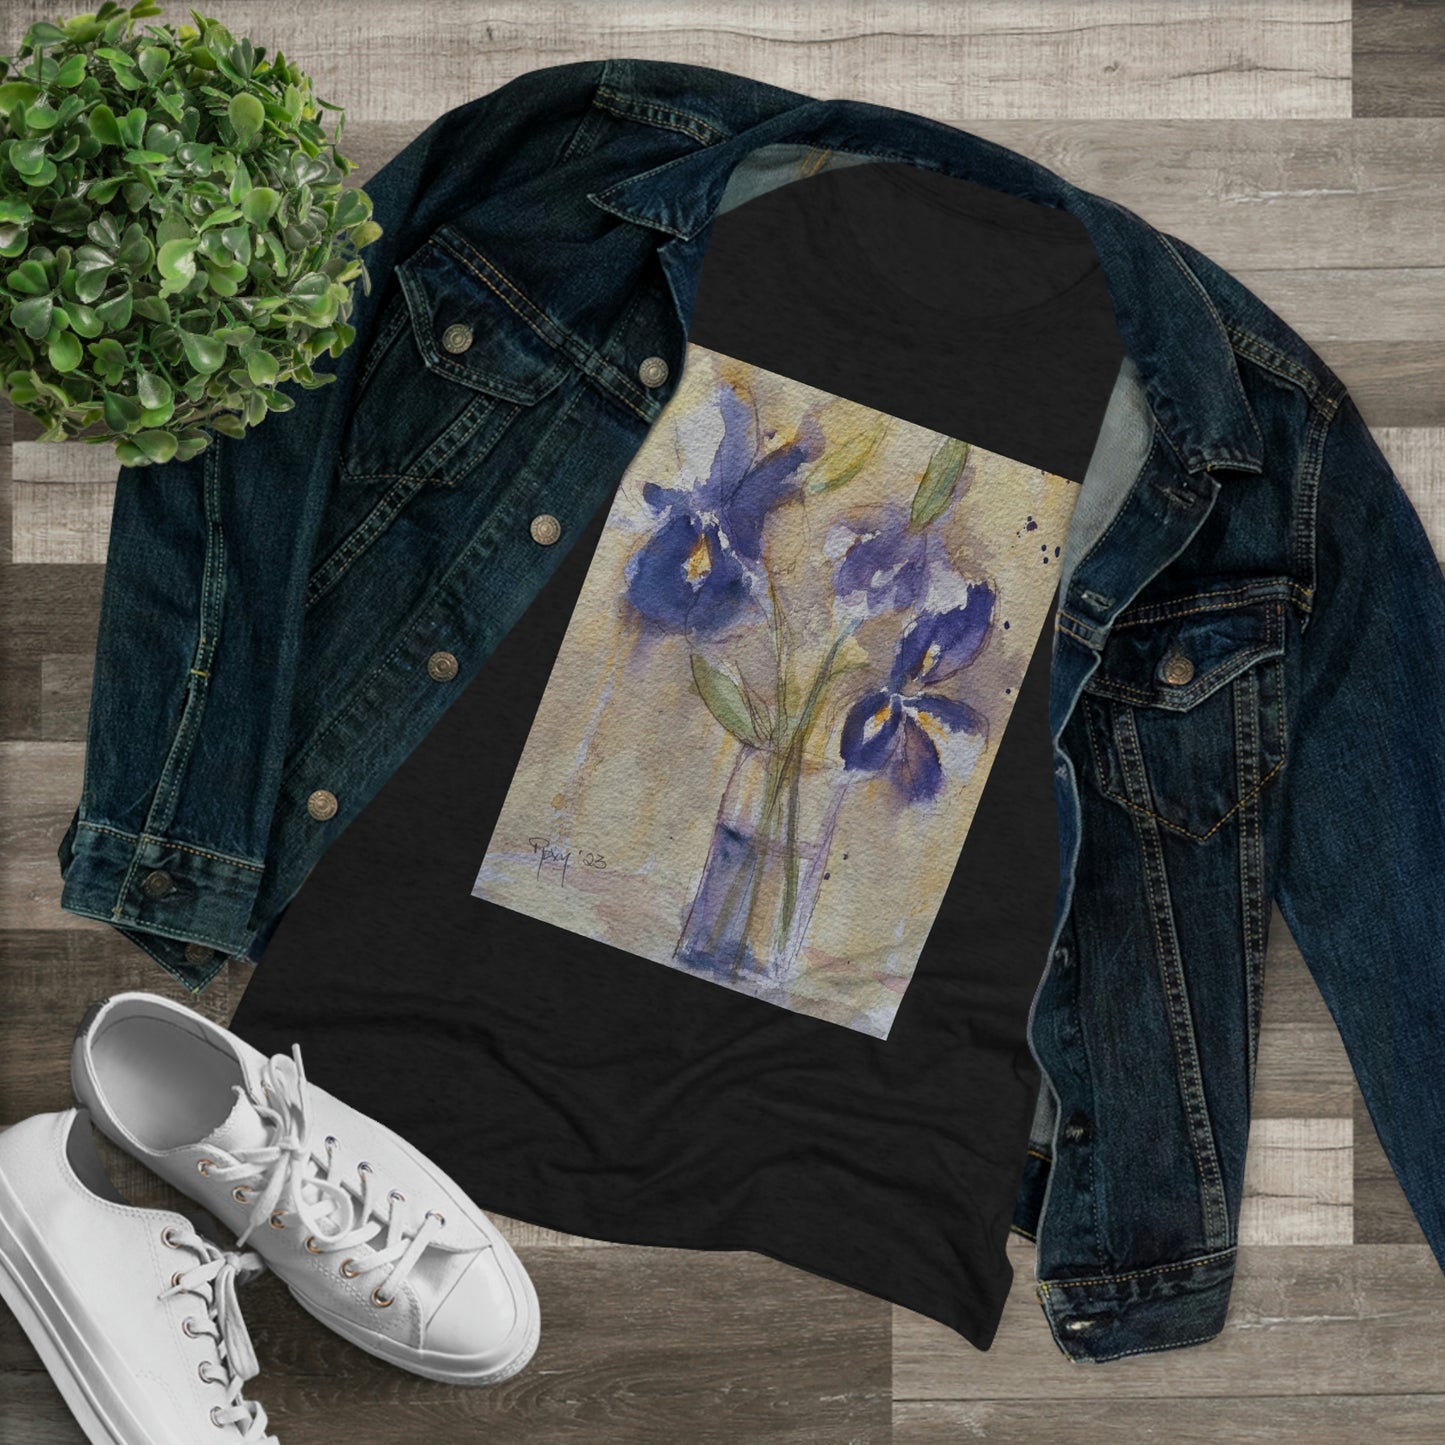 Purple Irises Women's fitted Triblend Tee  tee shirt